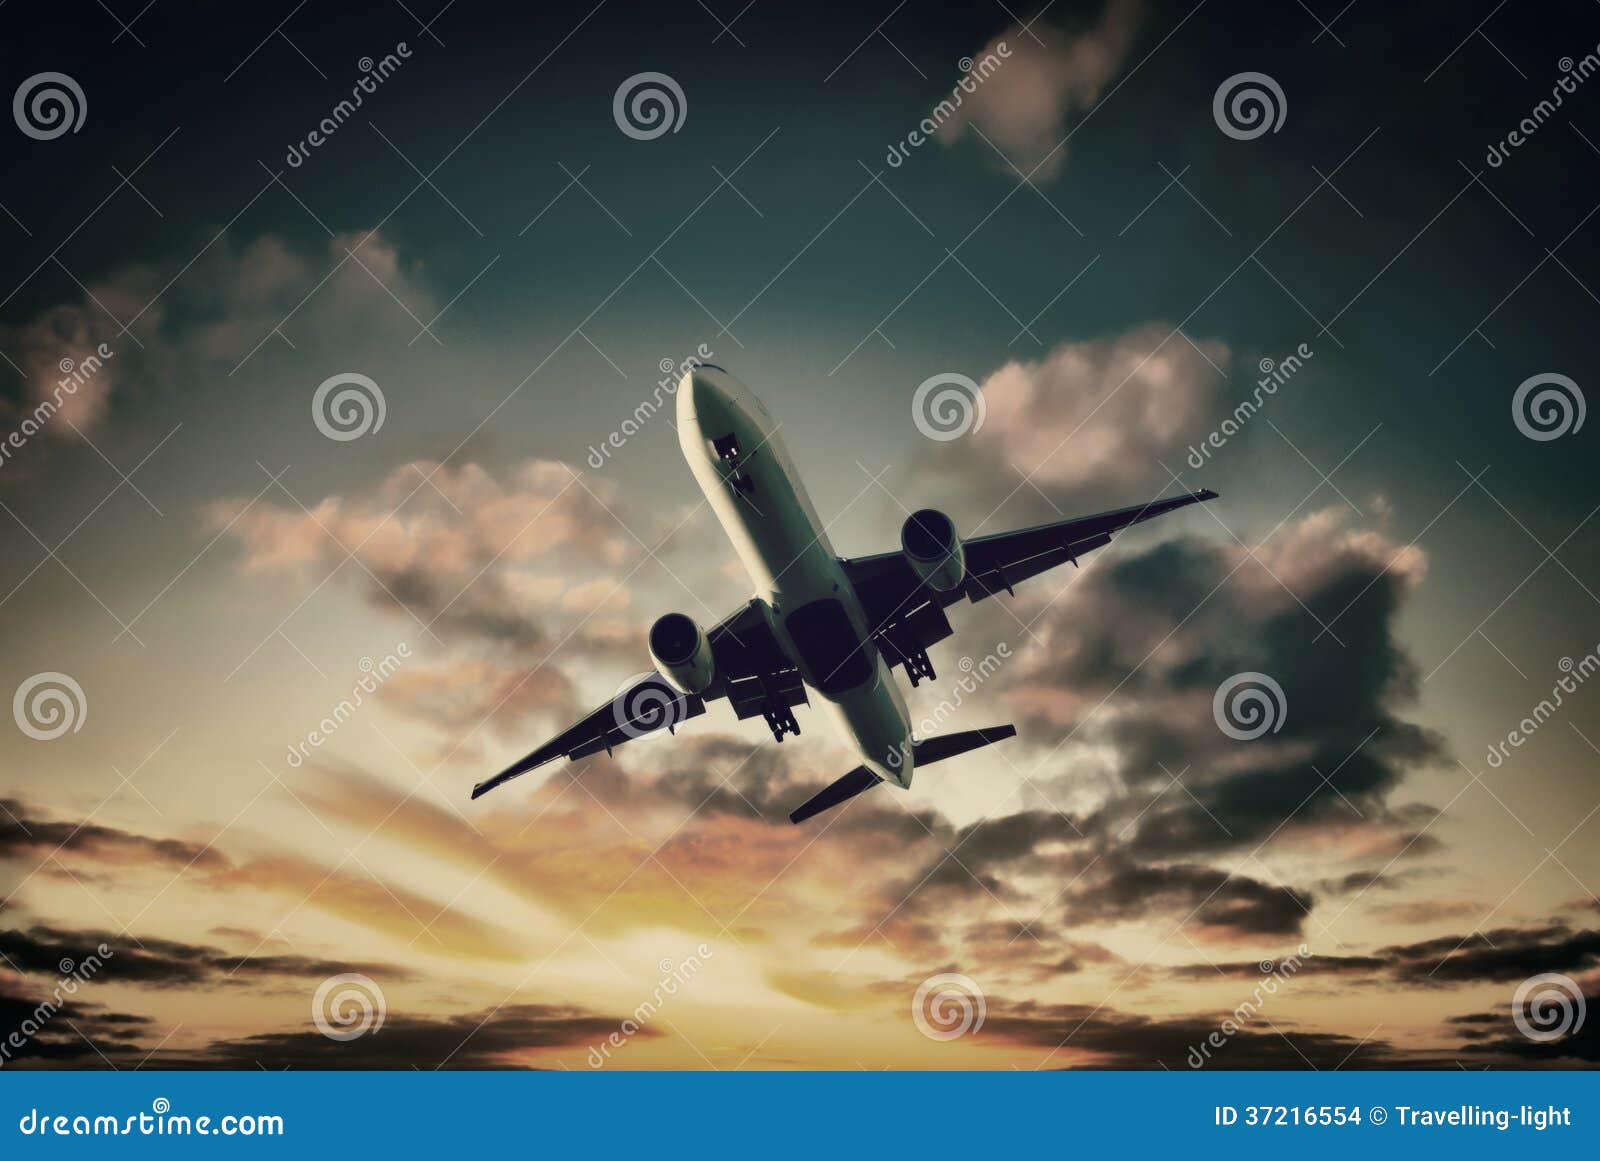 jet aeroplane landing from bright sunset sky